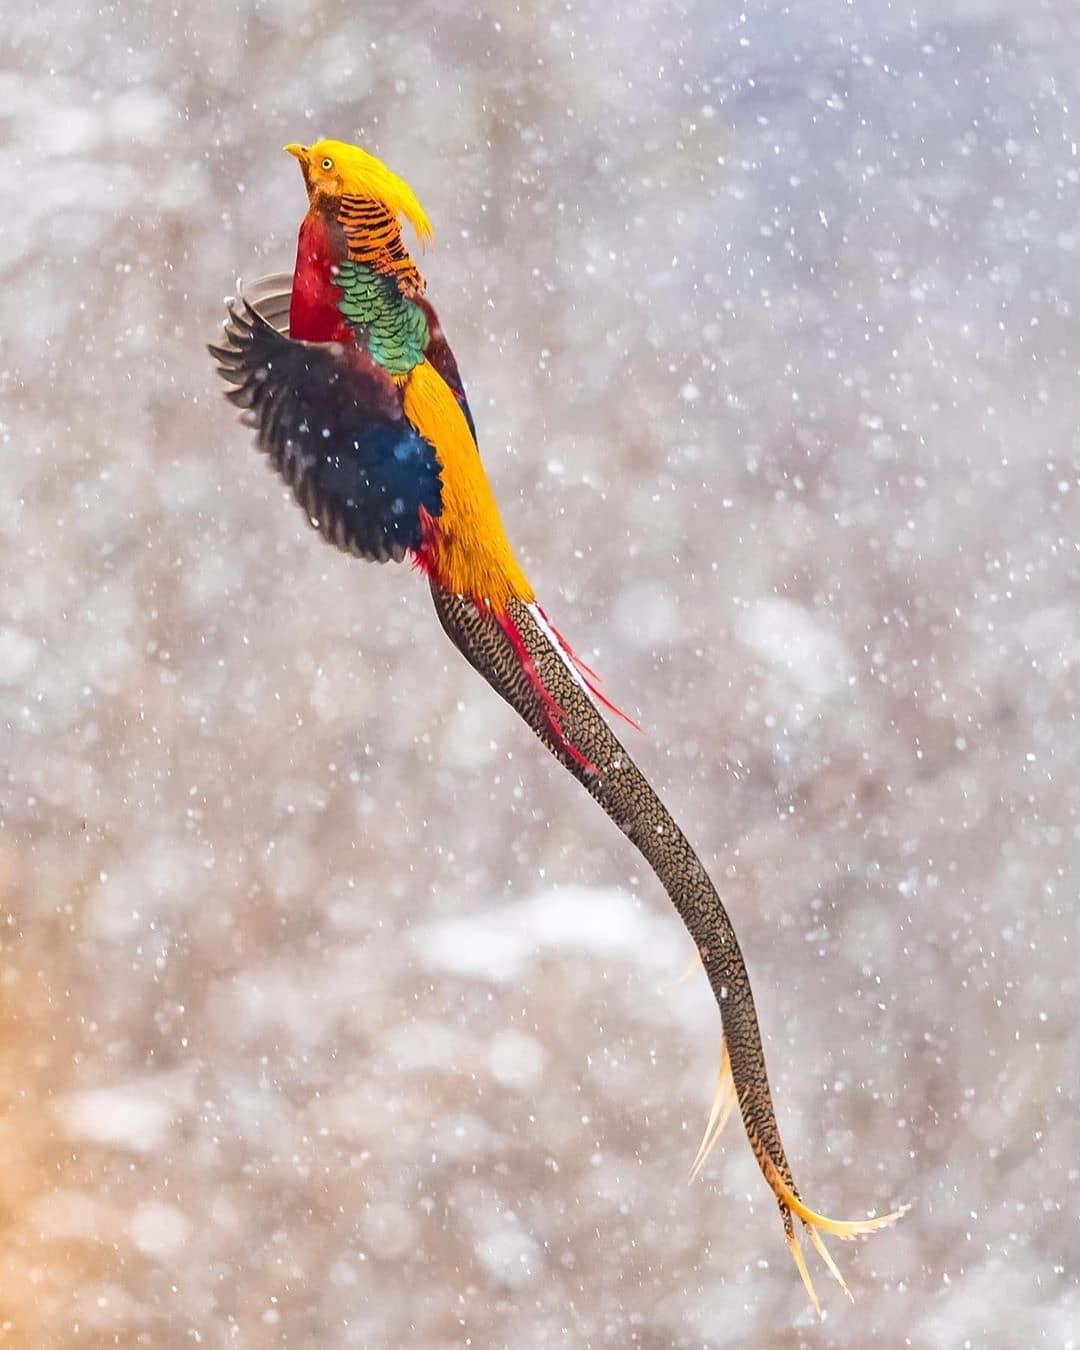  飞翔中的红腹锦鸡，来自摄影师KHALID SHARIF。 